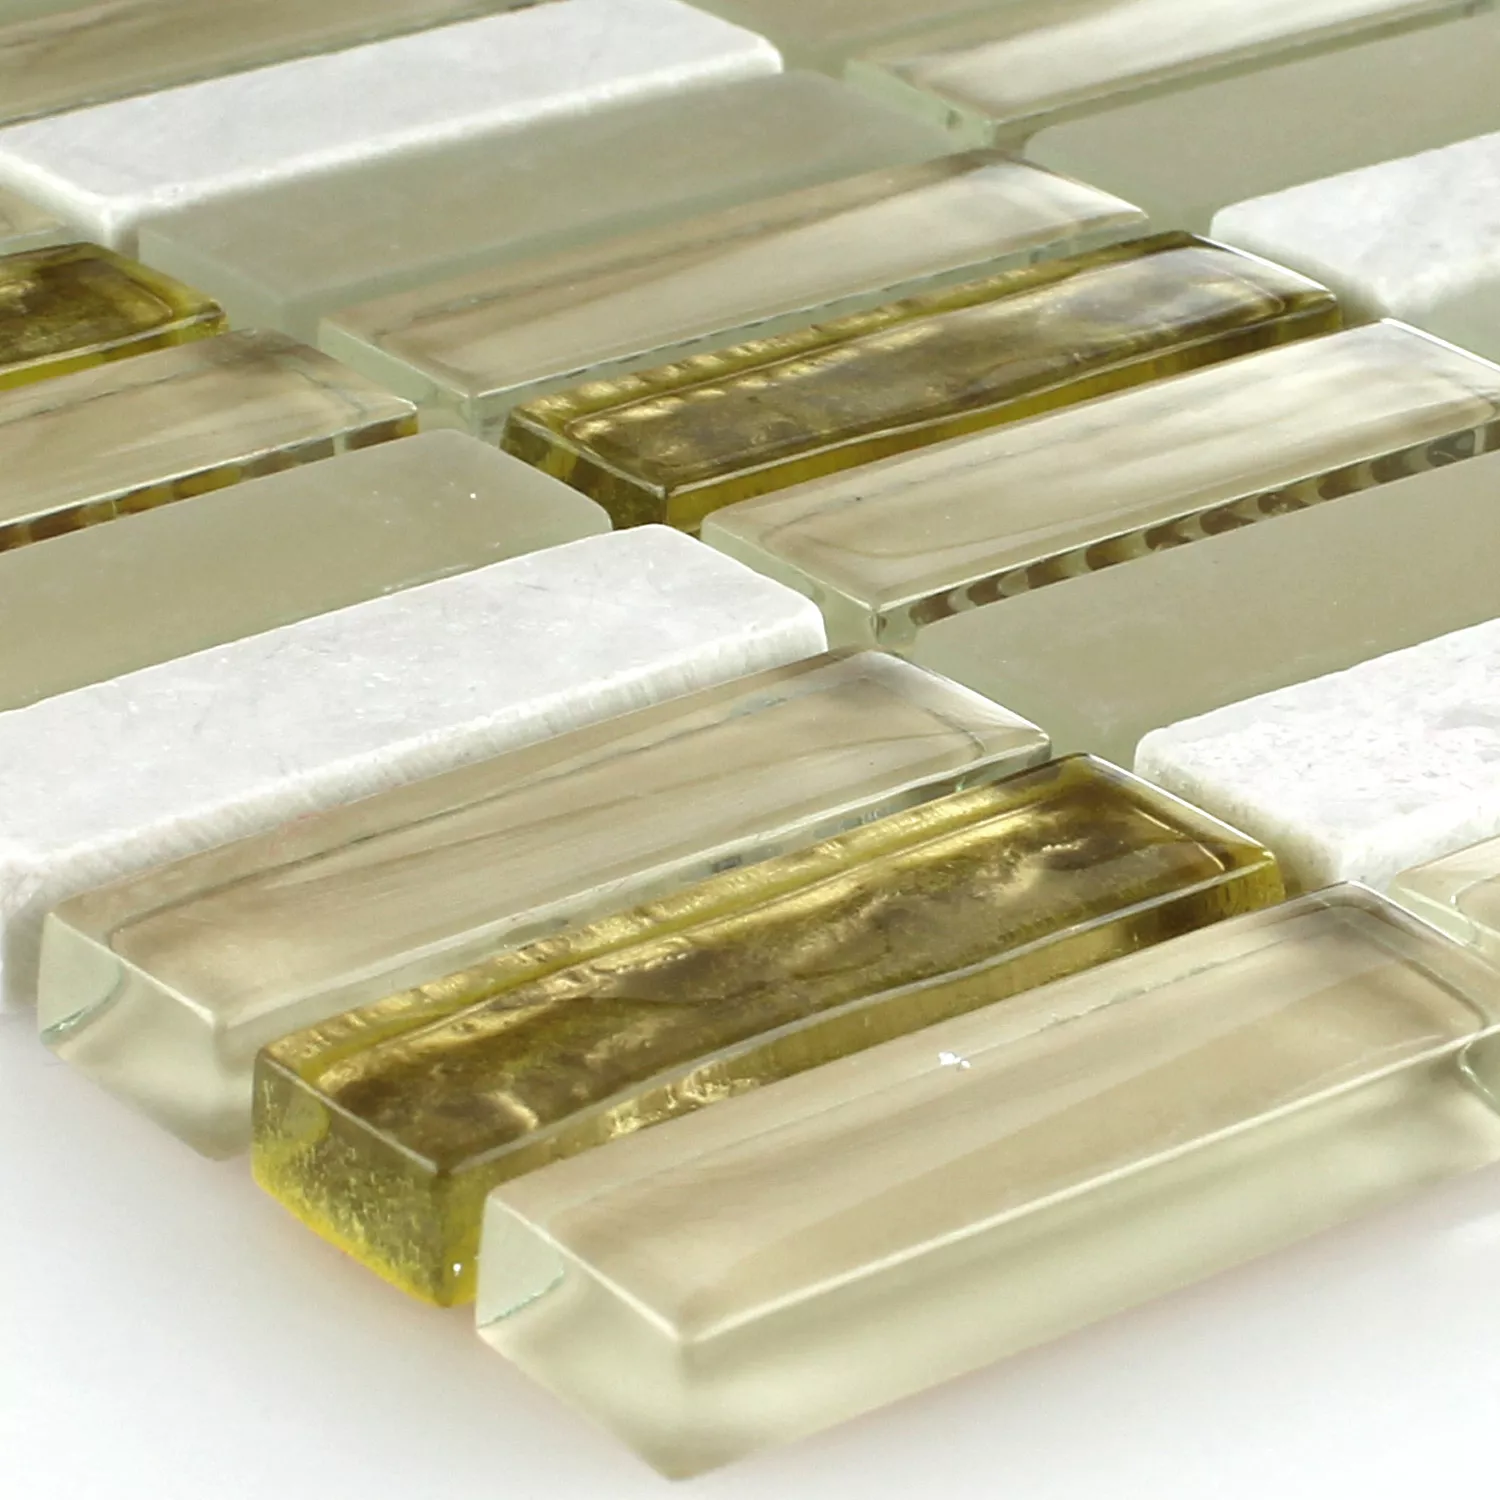 Mosaic Tiles Glass Marble White Gold Mix